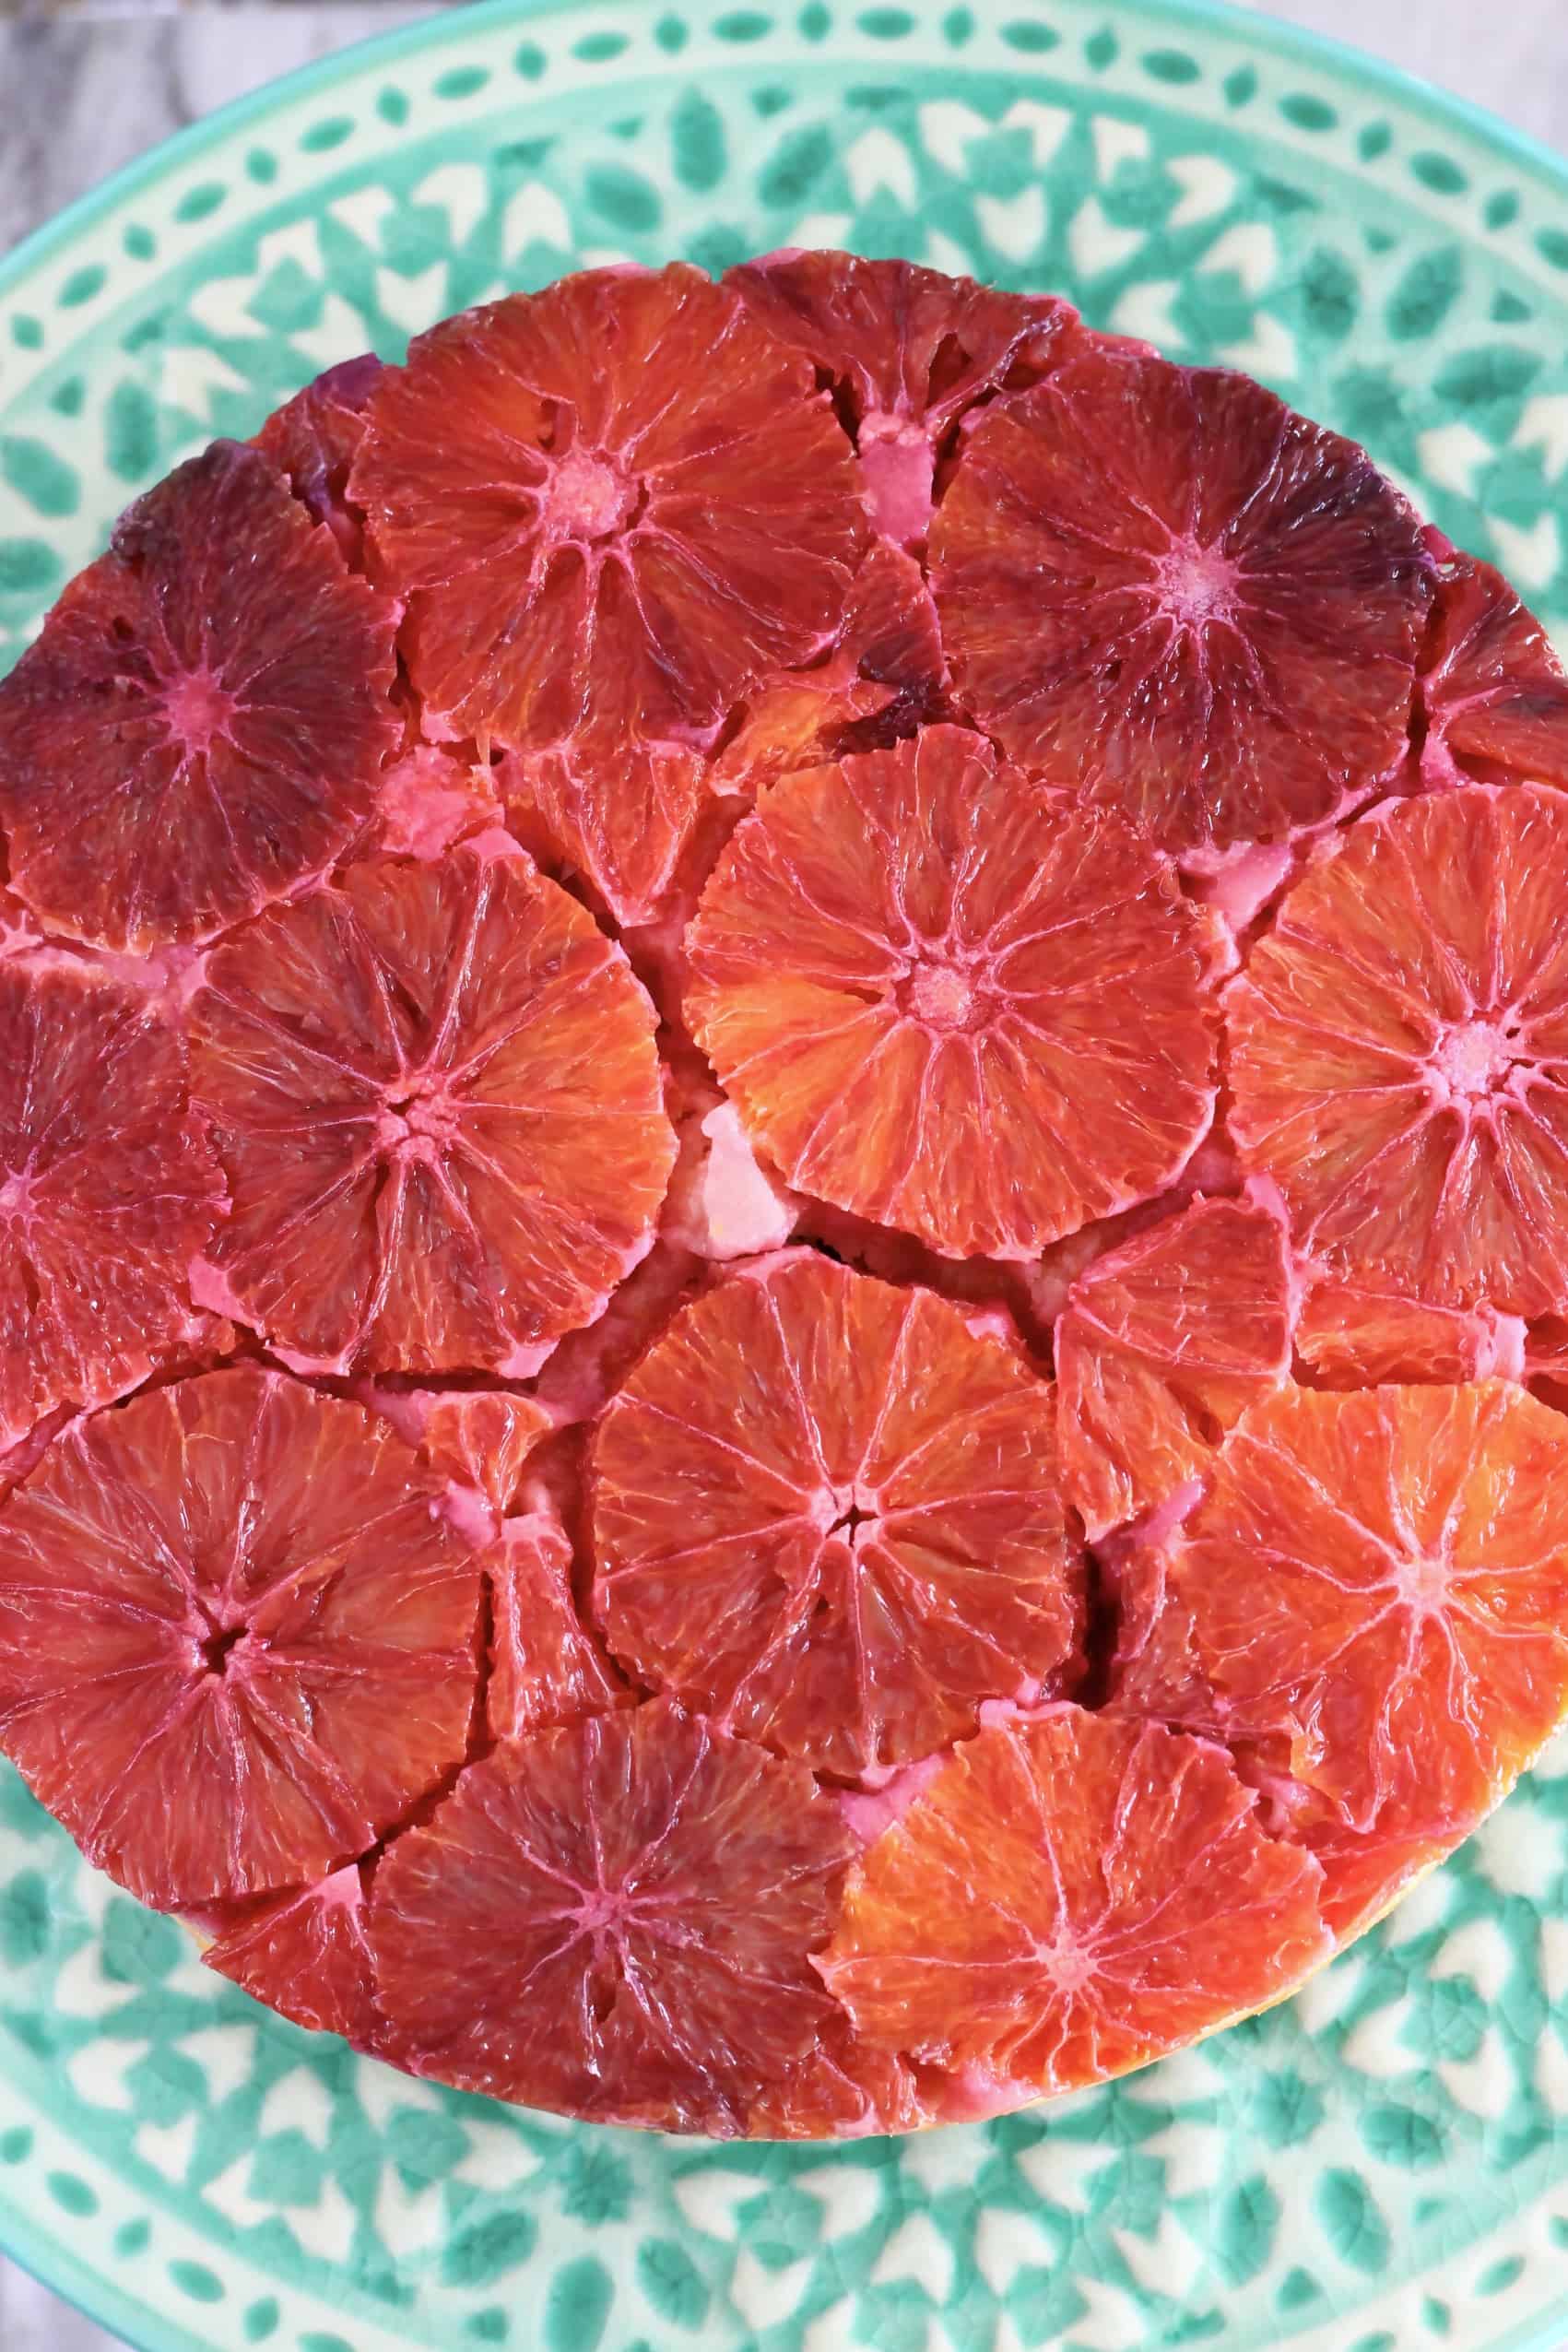 A gluten-free vegan blood orange upside down cake upturned onto a cake stand